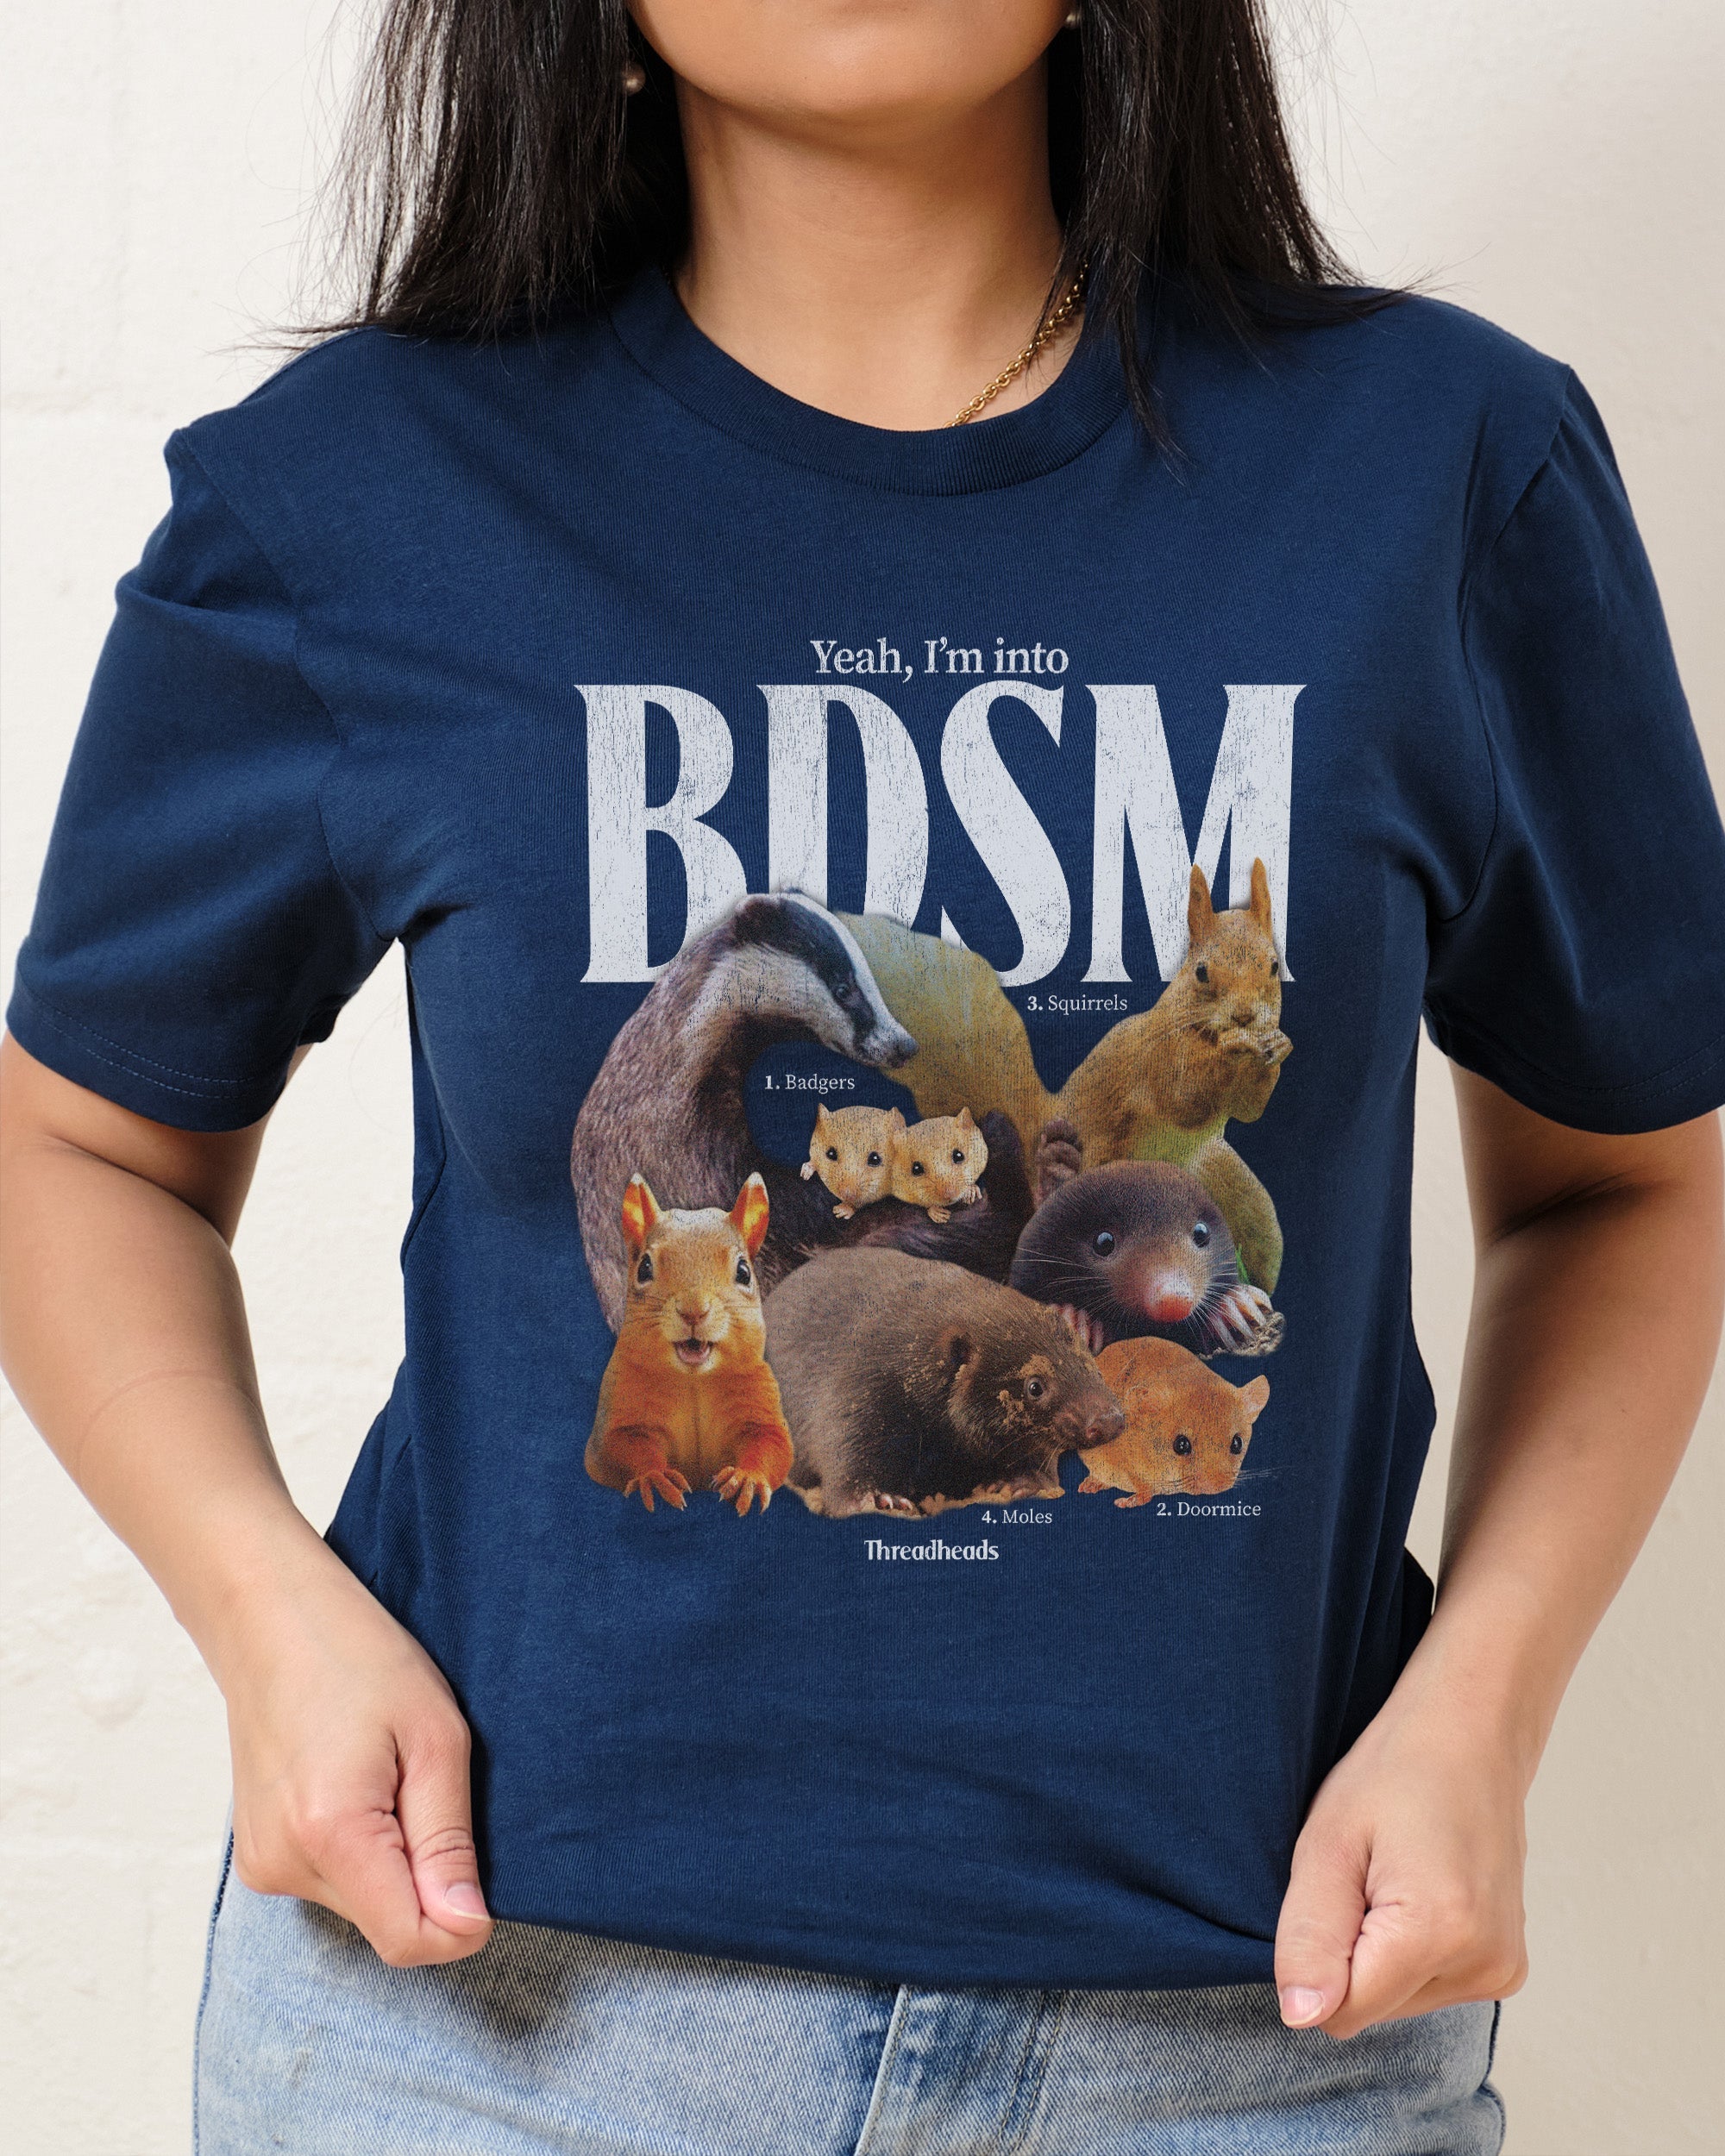 BDSM T-Shirt Australia Online Navy